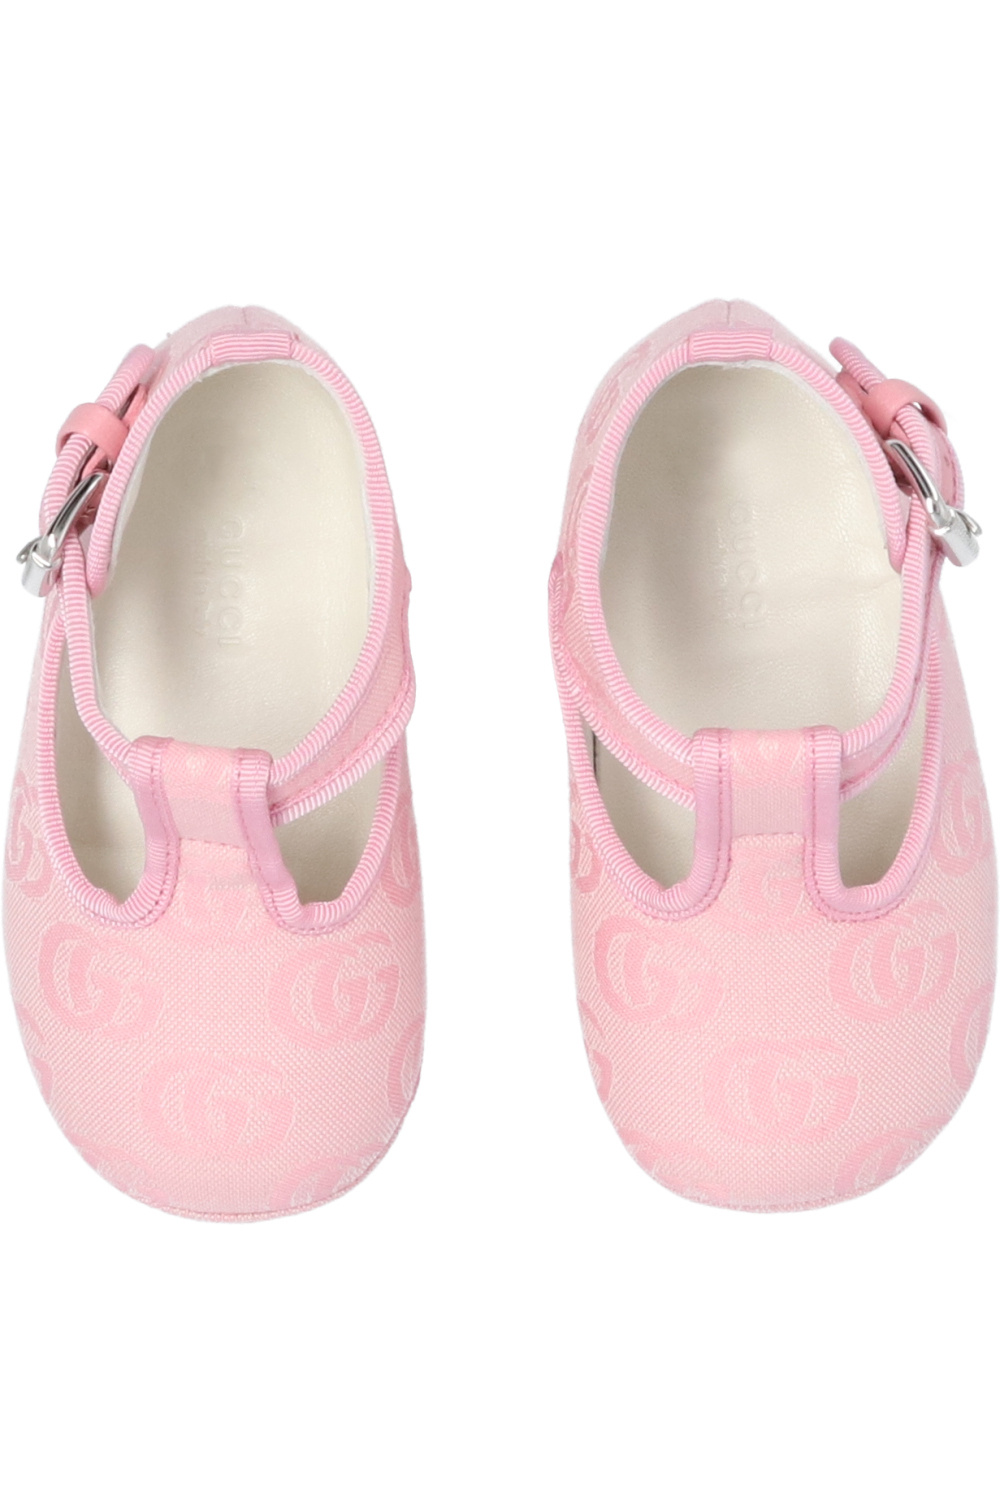 fond terrorist debat Pink Shoes with logo Gucci Kids - Vitkac Spain